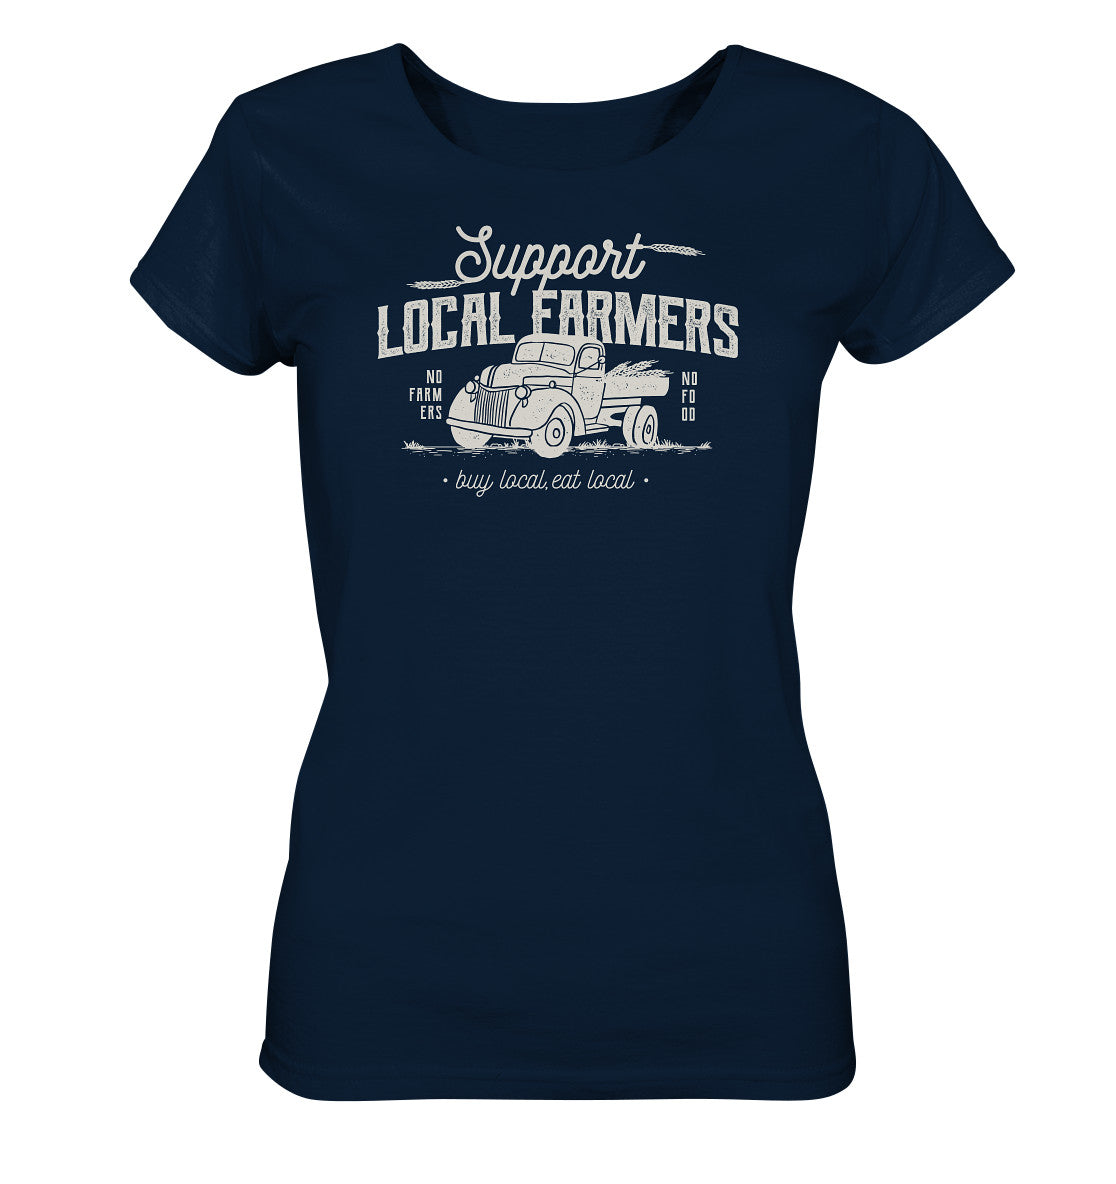 Support local Farmers. Retro Shirt Landwirt. No Farmers no food. Dorfkram® blau navy